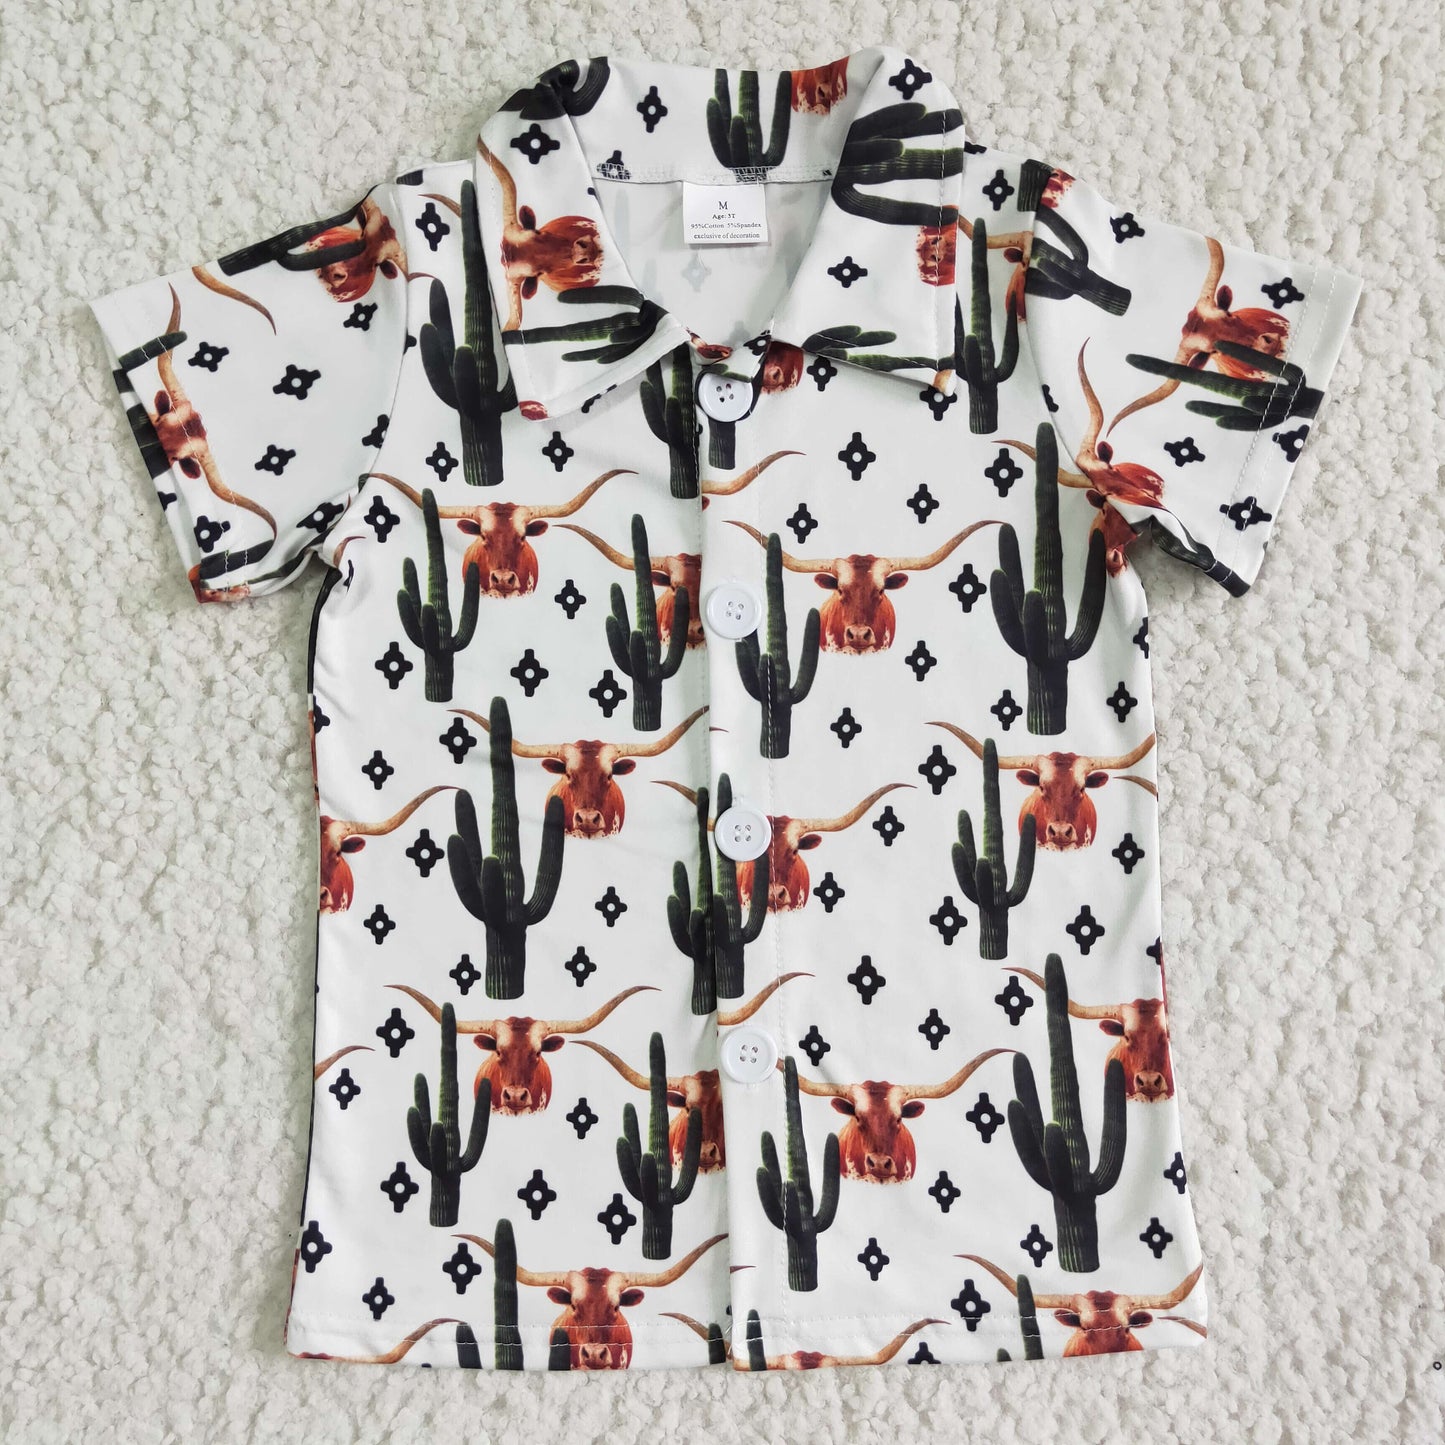 6 Print Western Design Boys Summer Tee Shirts Top